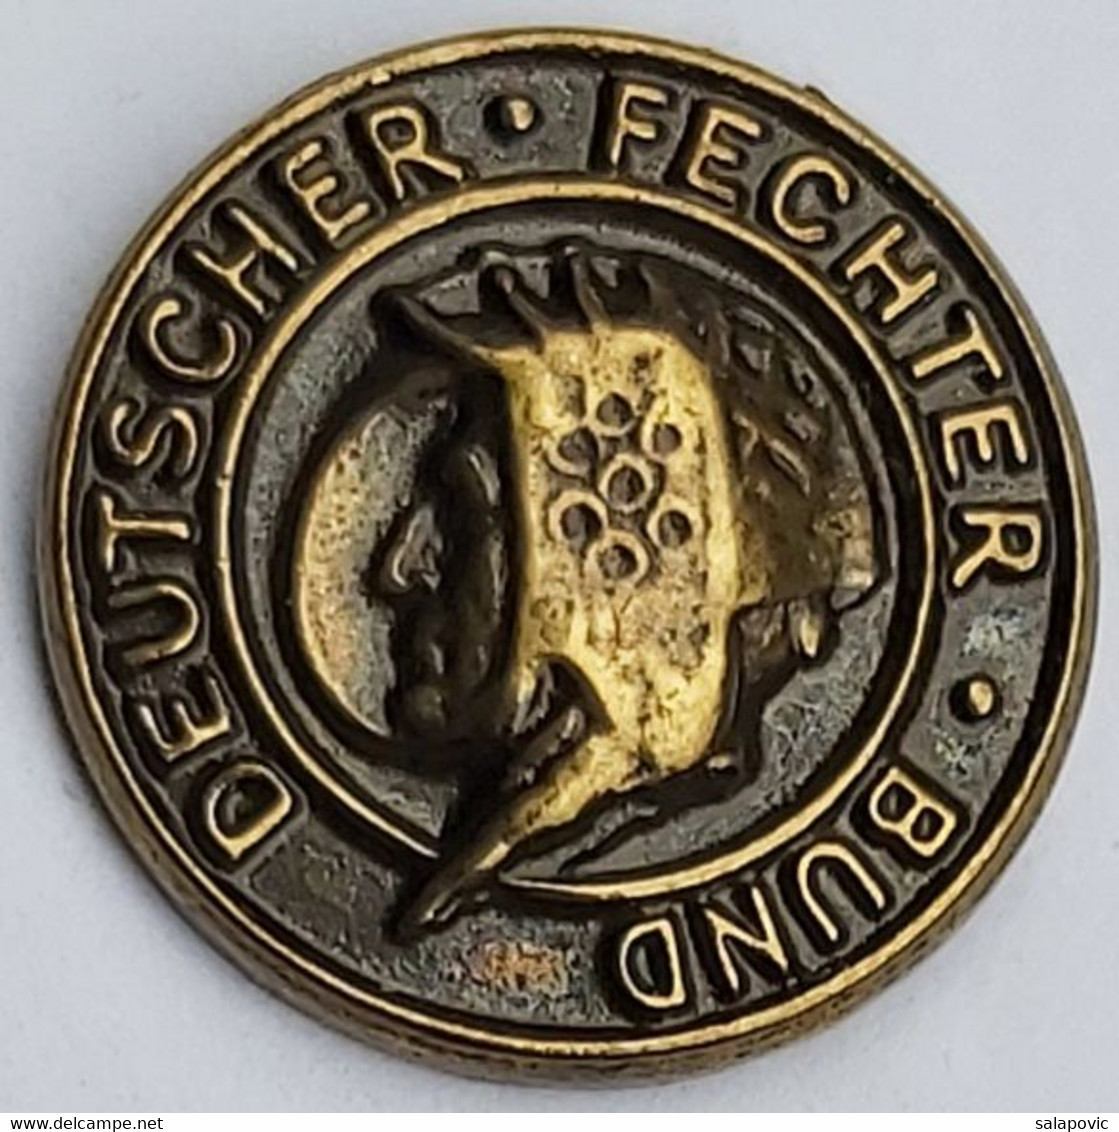 Deutsche Fechter-Bund Germany Fencing Federation Association Union PINS A10/10 - Fencing